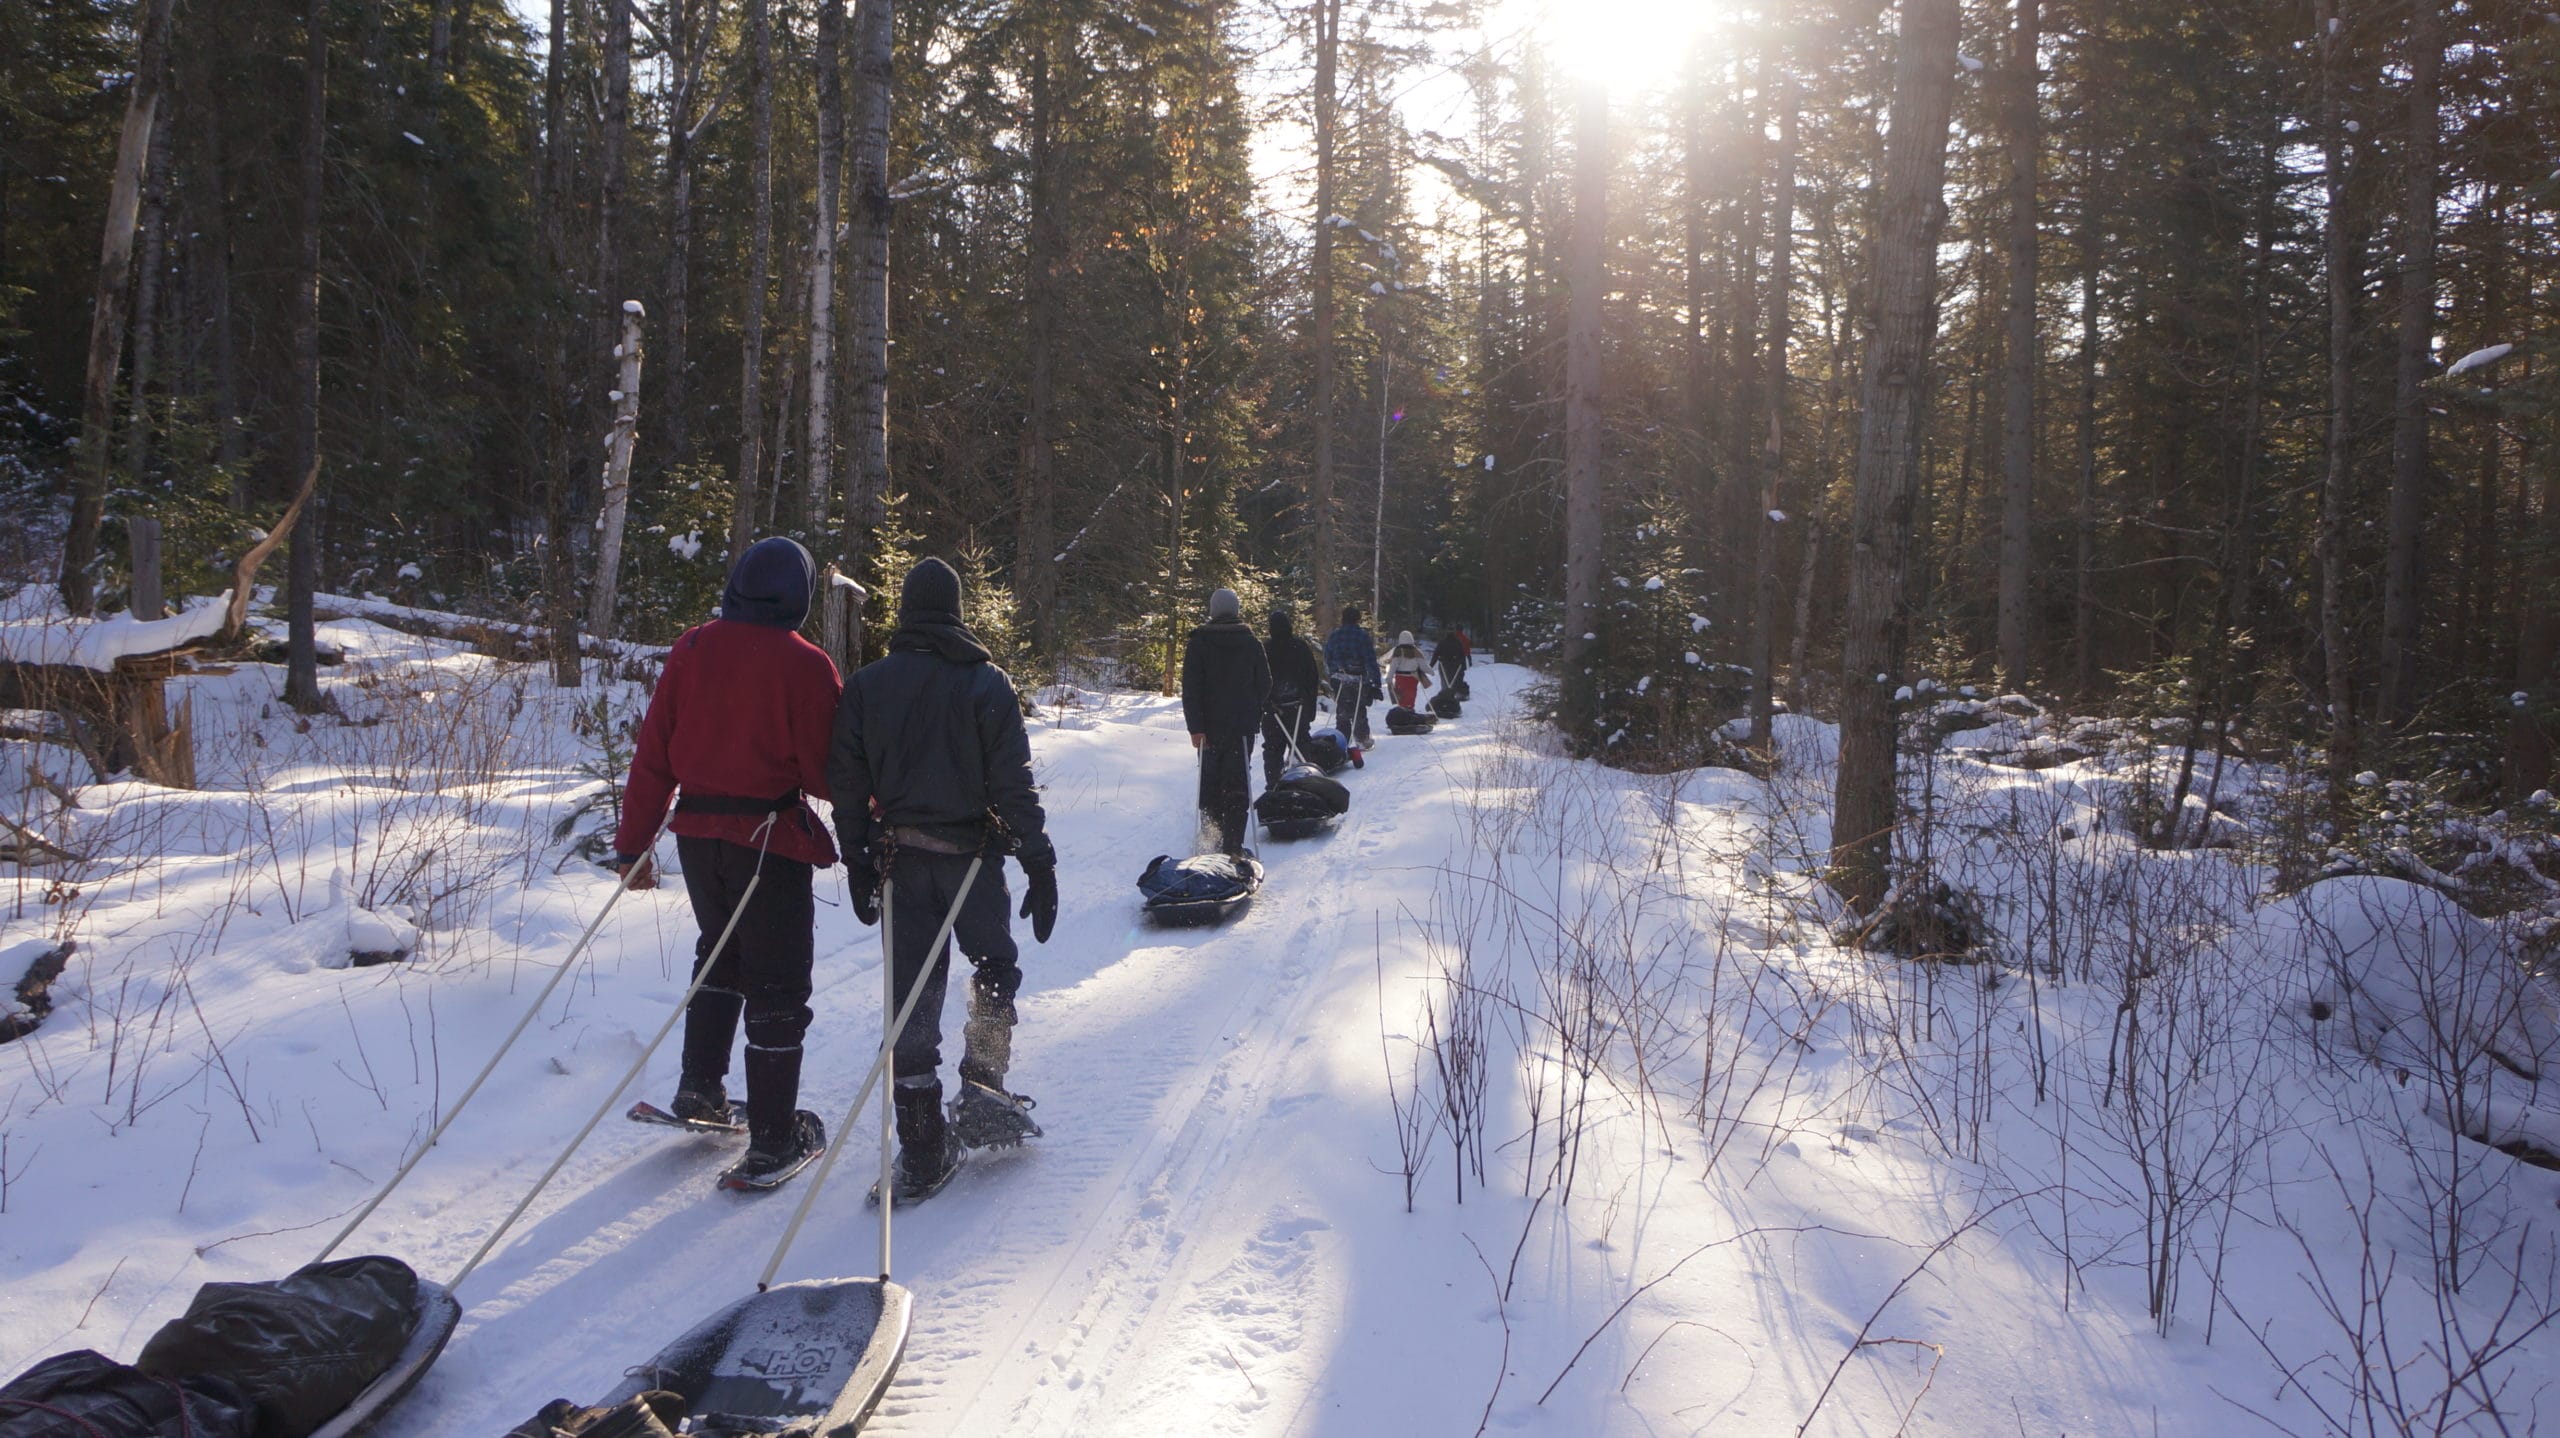 hikers trek through snowy forest